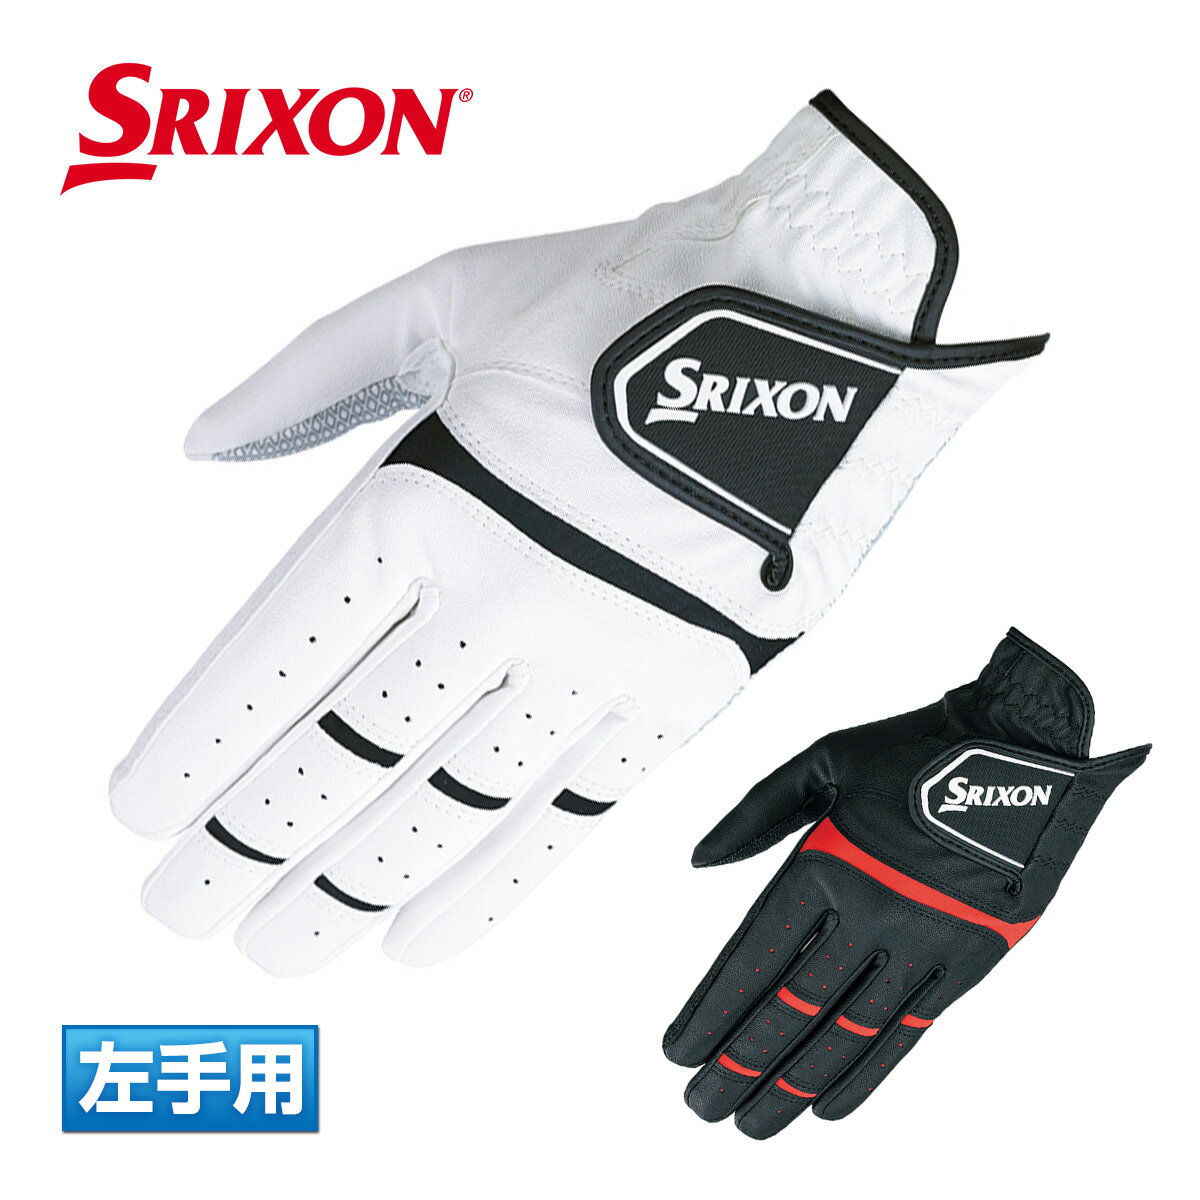 DUNLOP ダンロップ日本正規品 SRIXON スリクソン シリコングリップ メンズ ゴルフグローブ(左手用) 「 GGG-S026 」 